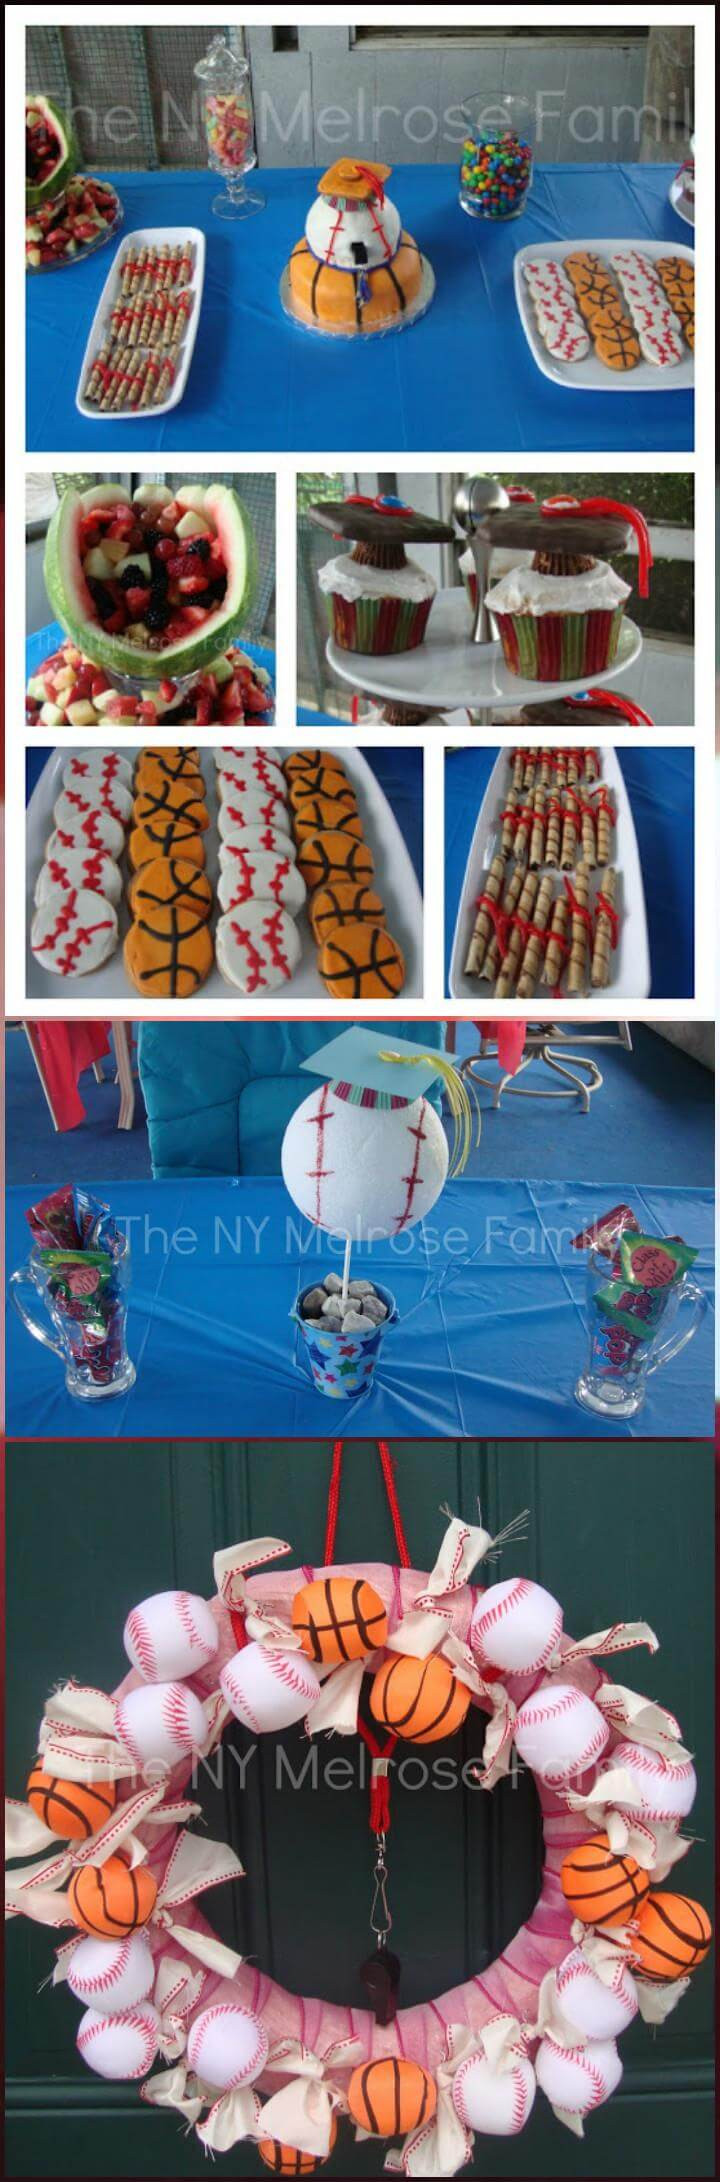 Sports Themed Graduation Party Ideas
 50 DIY Graduation Party Ideas & Decorations Page 2 of 4